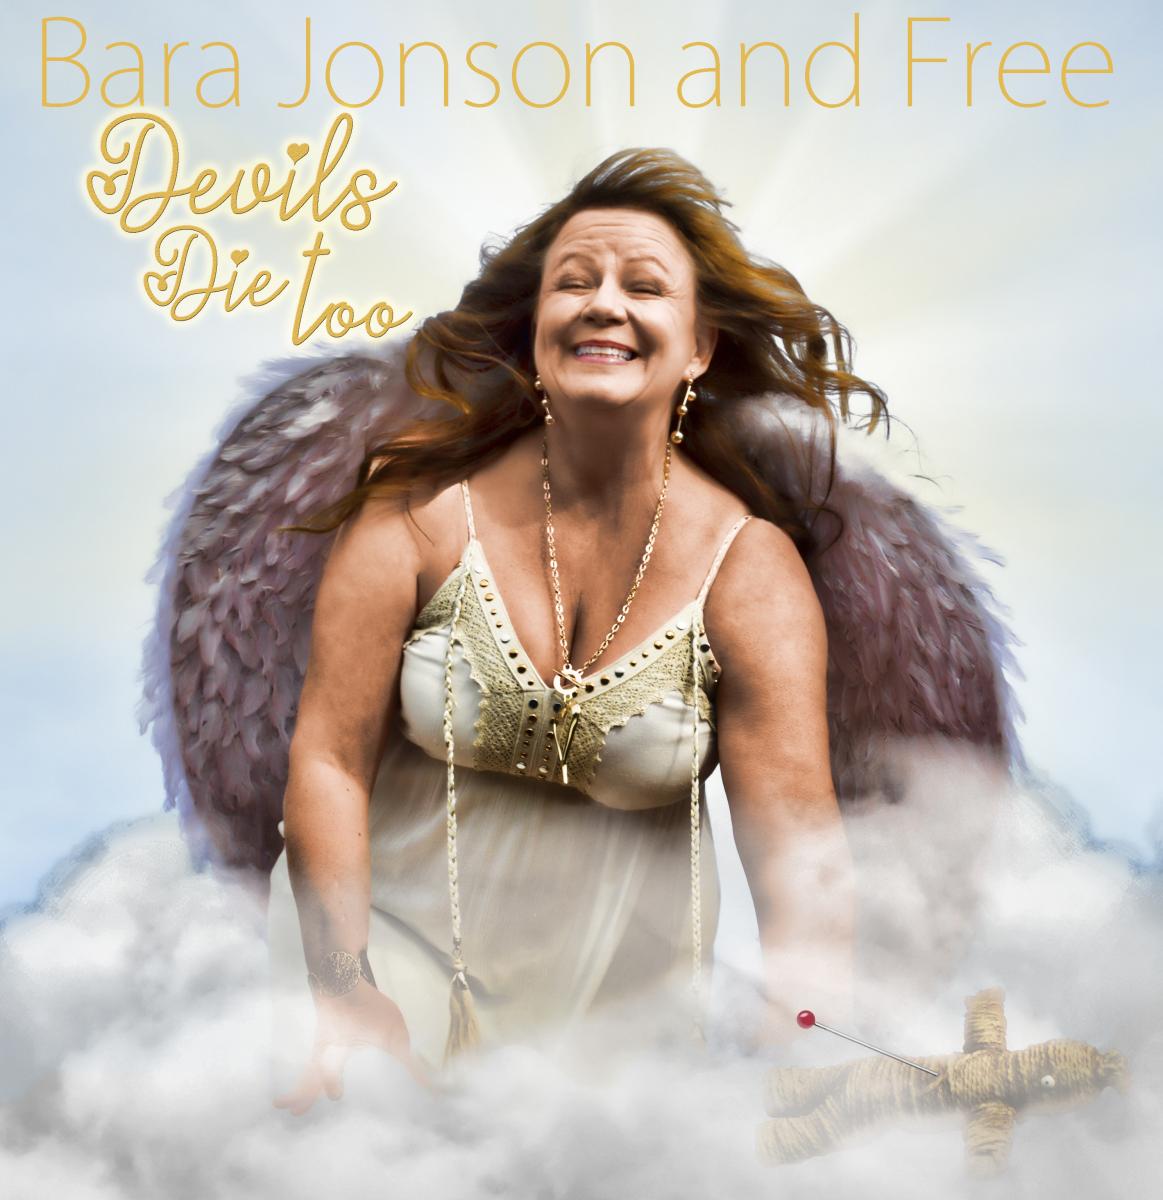 Bara Jonson and Free